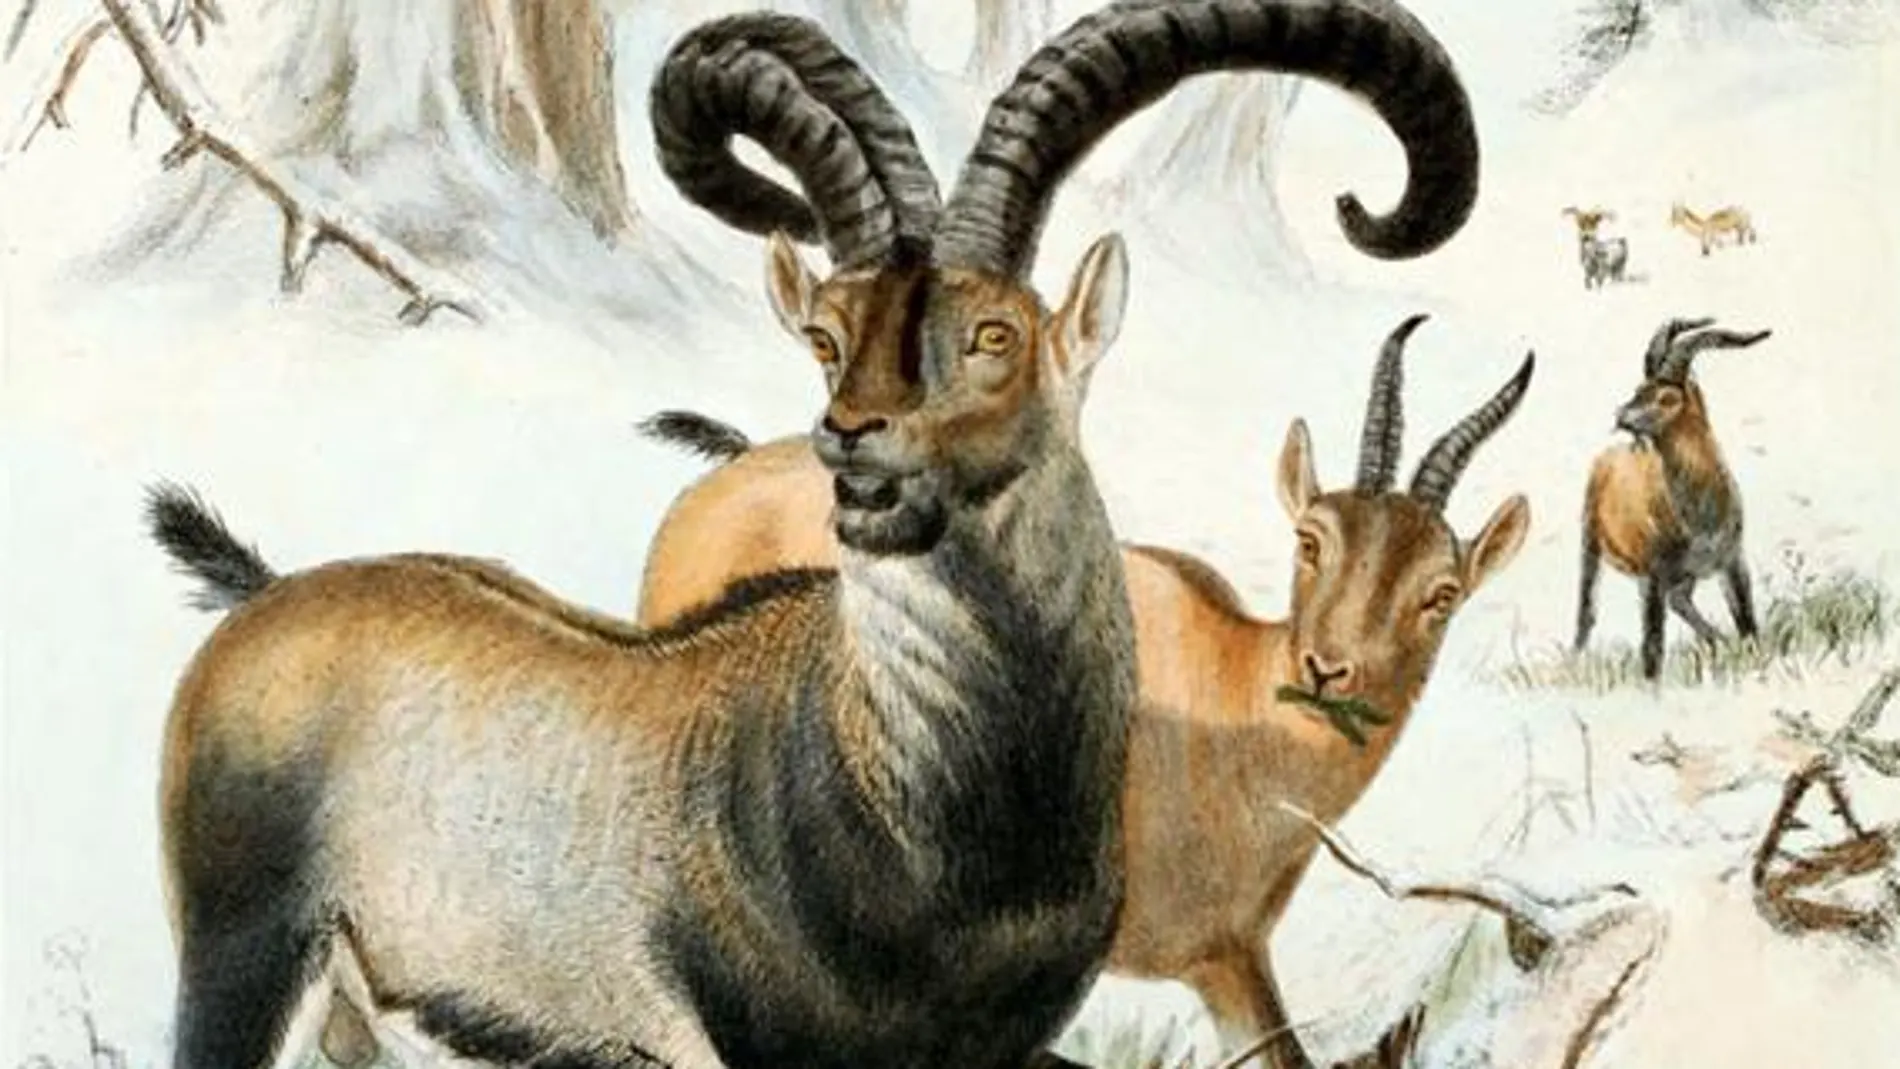 Pintura de un rebaño de cabras montesas usualmente identificadas como bucardos. Realizado en 1898 por Joseph Wolf.